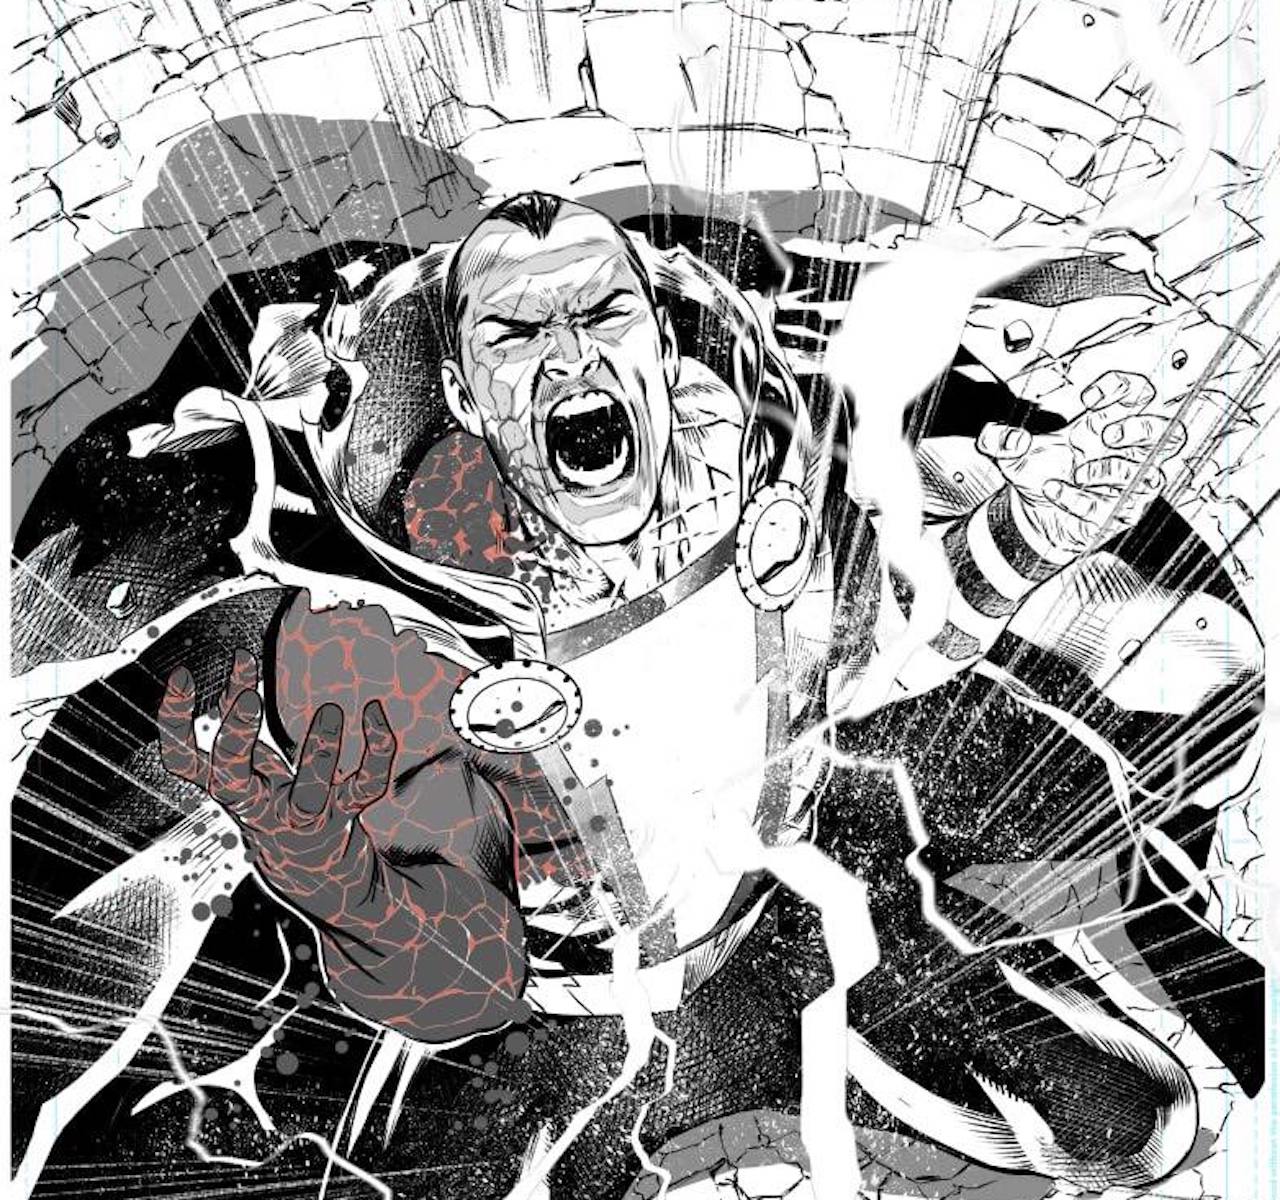 EXCLUSIVE DC First Look: Black Adam vs. Darkseid in 'Black Adam' #1 art